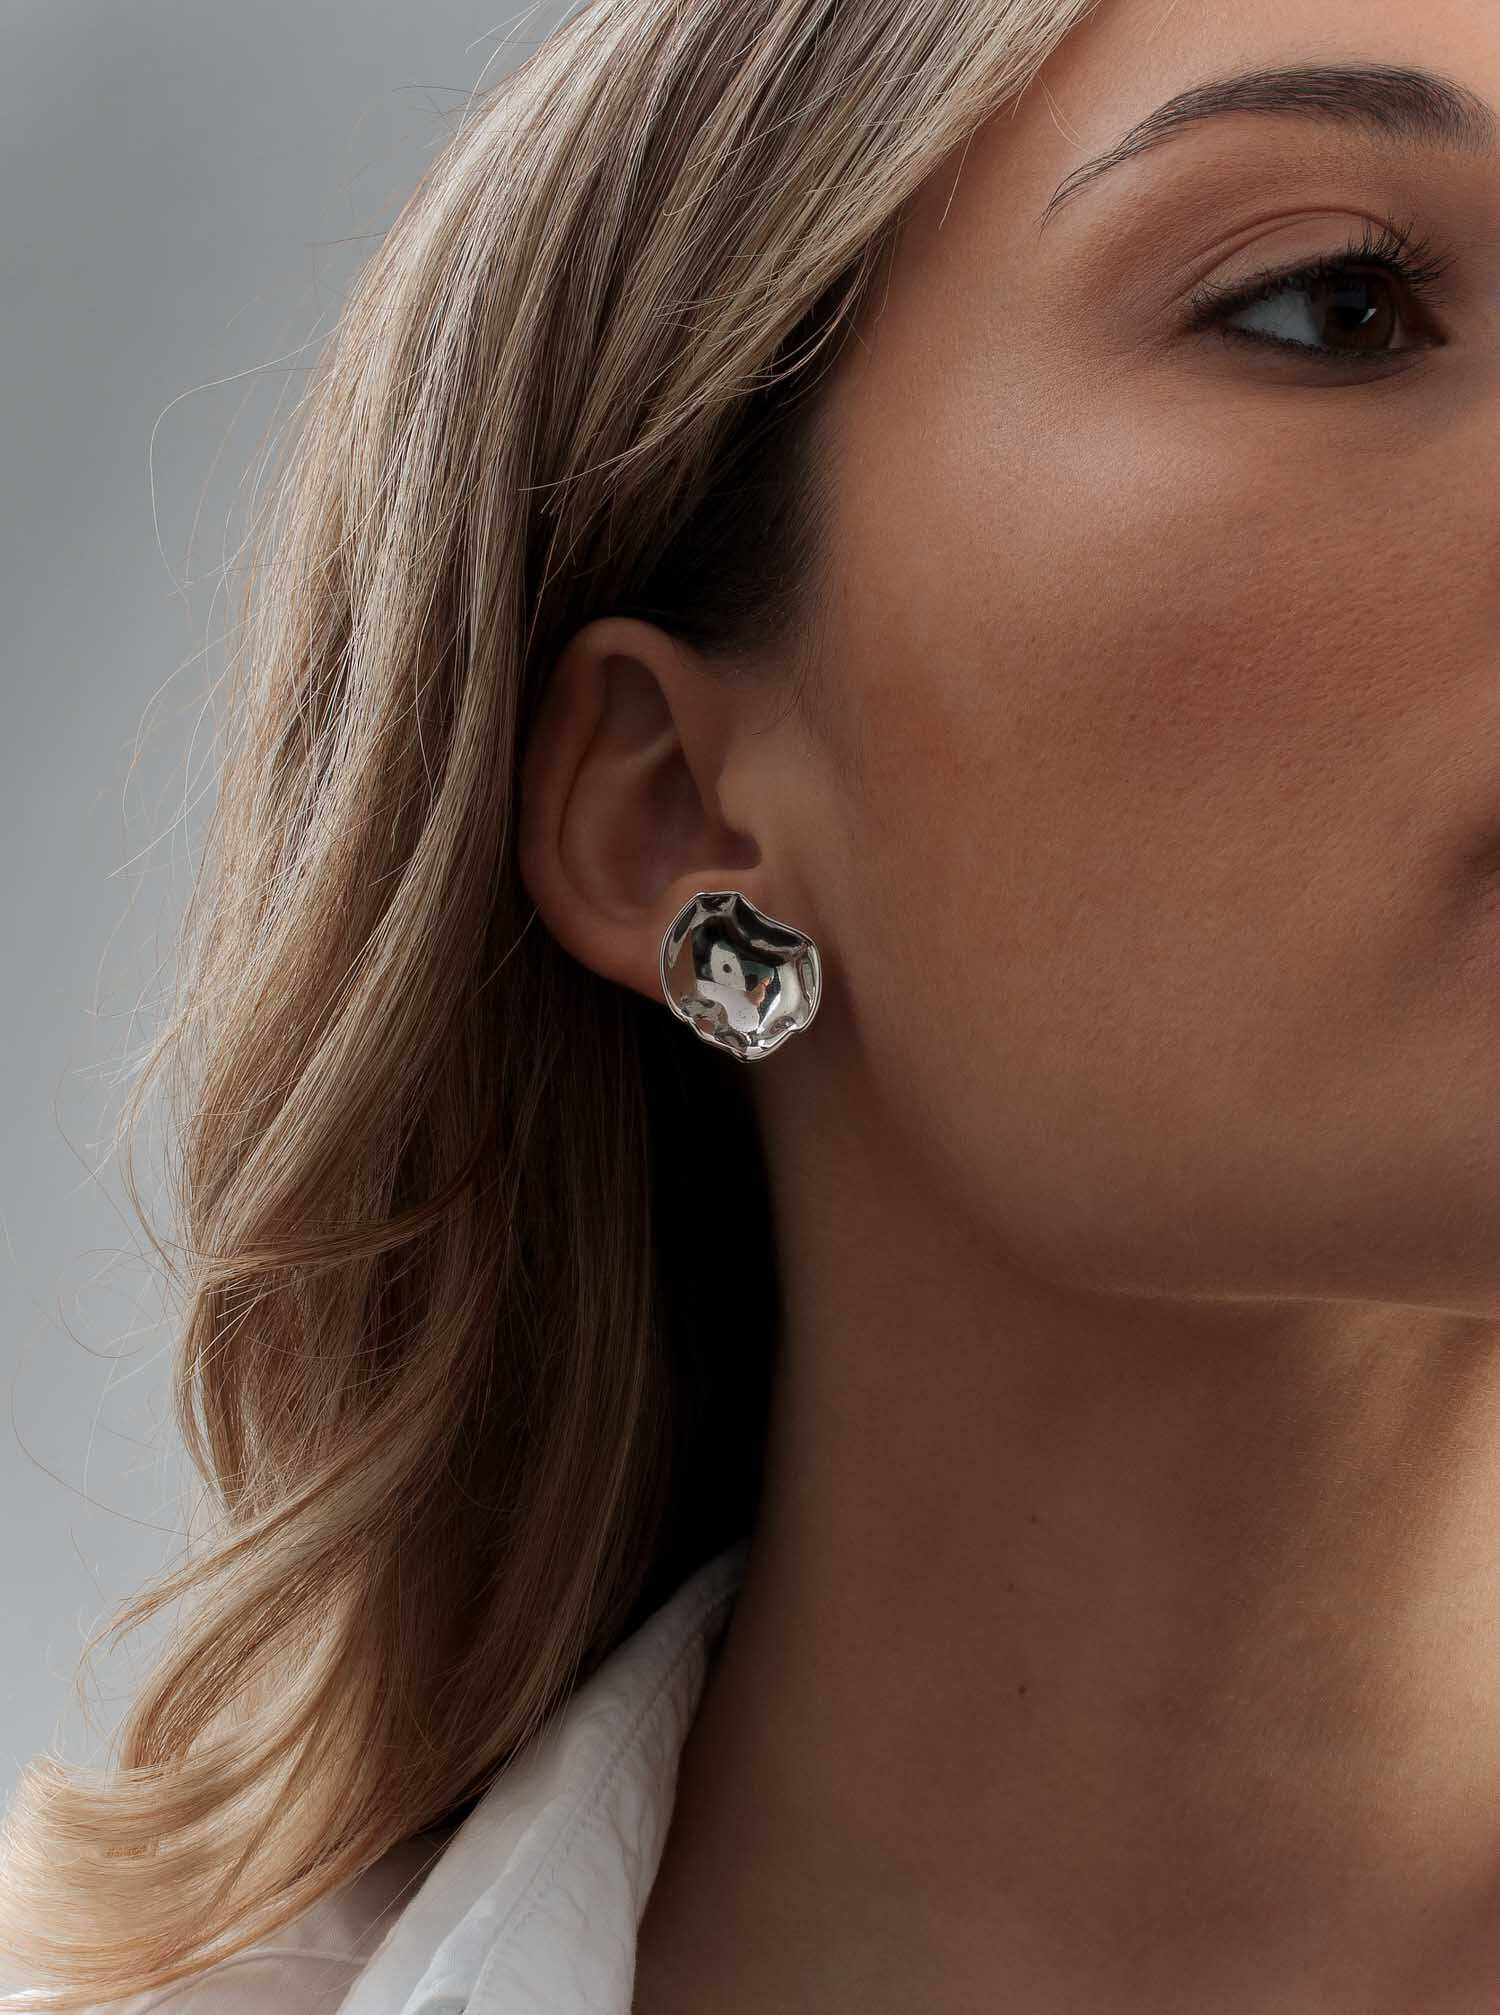 Earrings - Original silver earrings with convex design